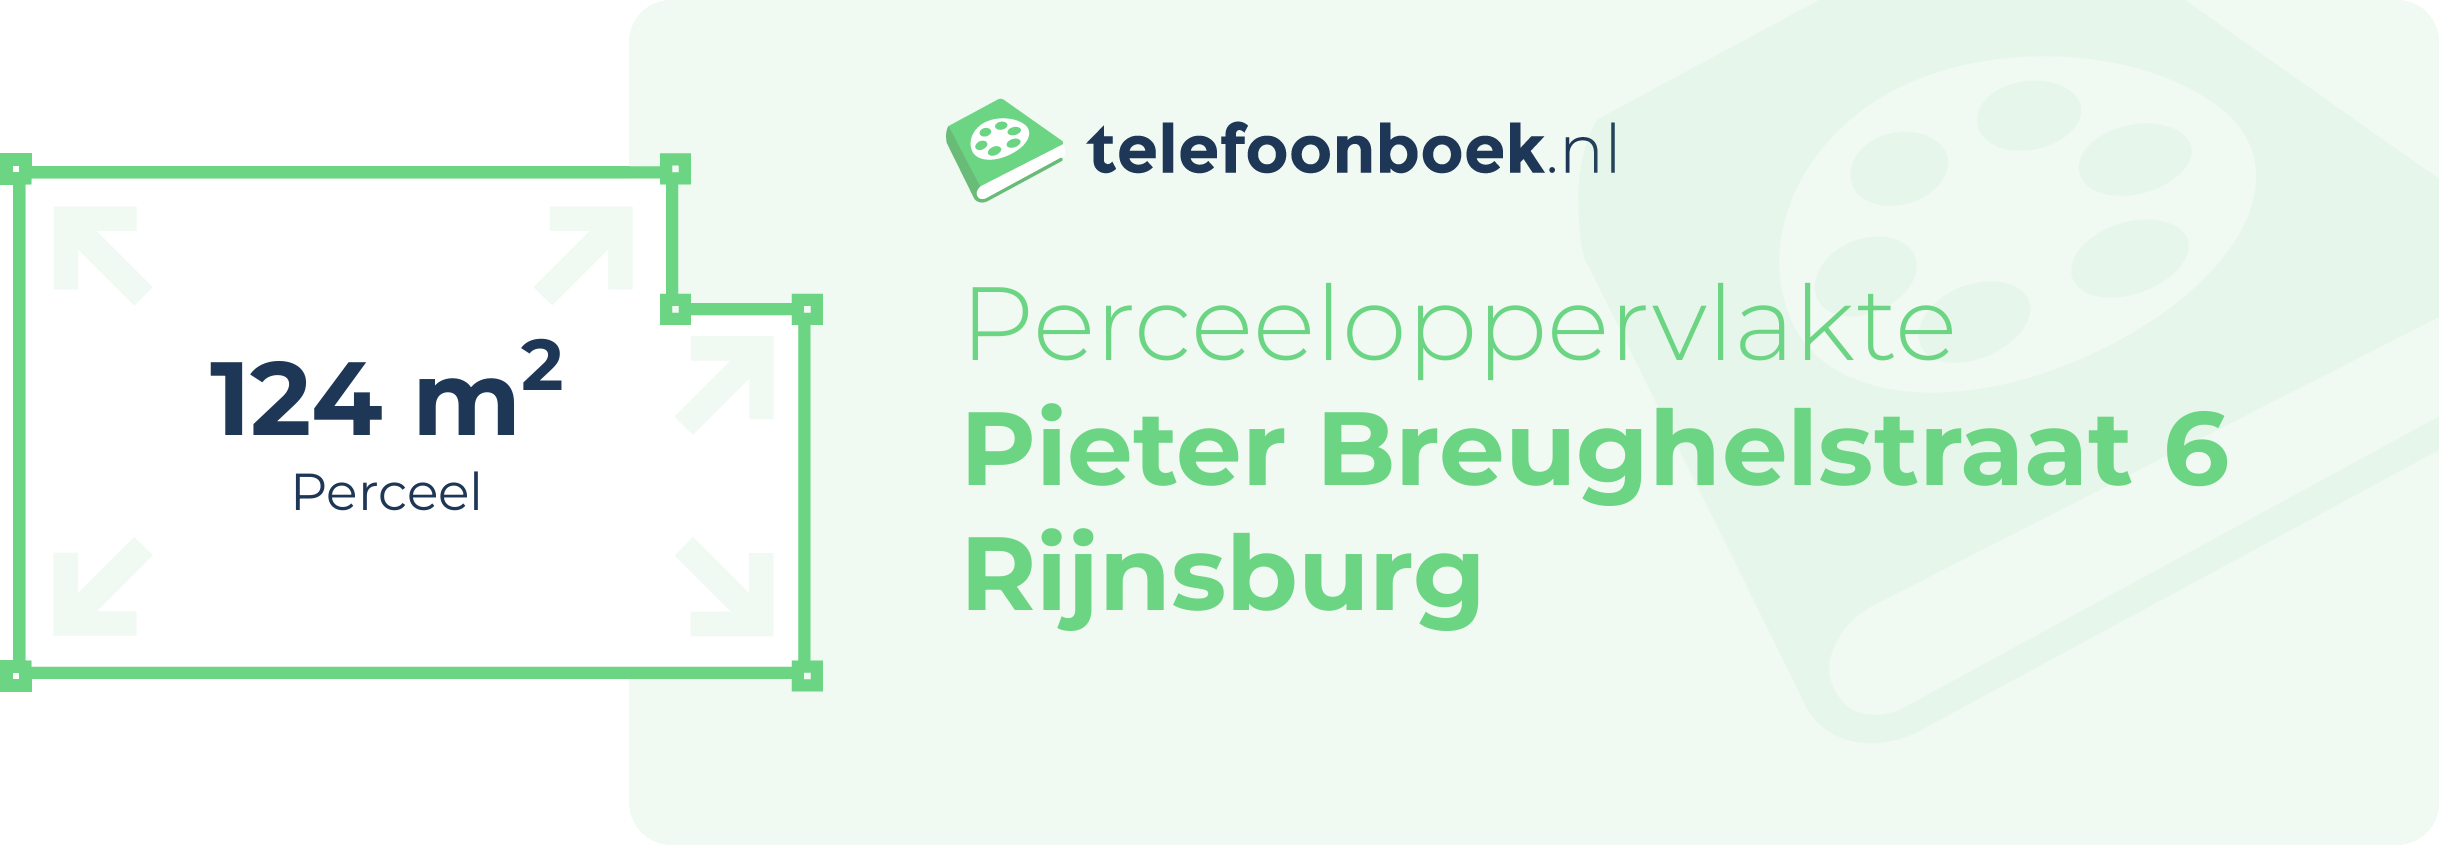 Perceeloppervlakte Pieter Breughelstraat 6 Rijnsburg